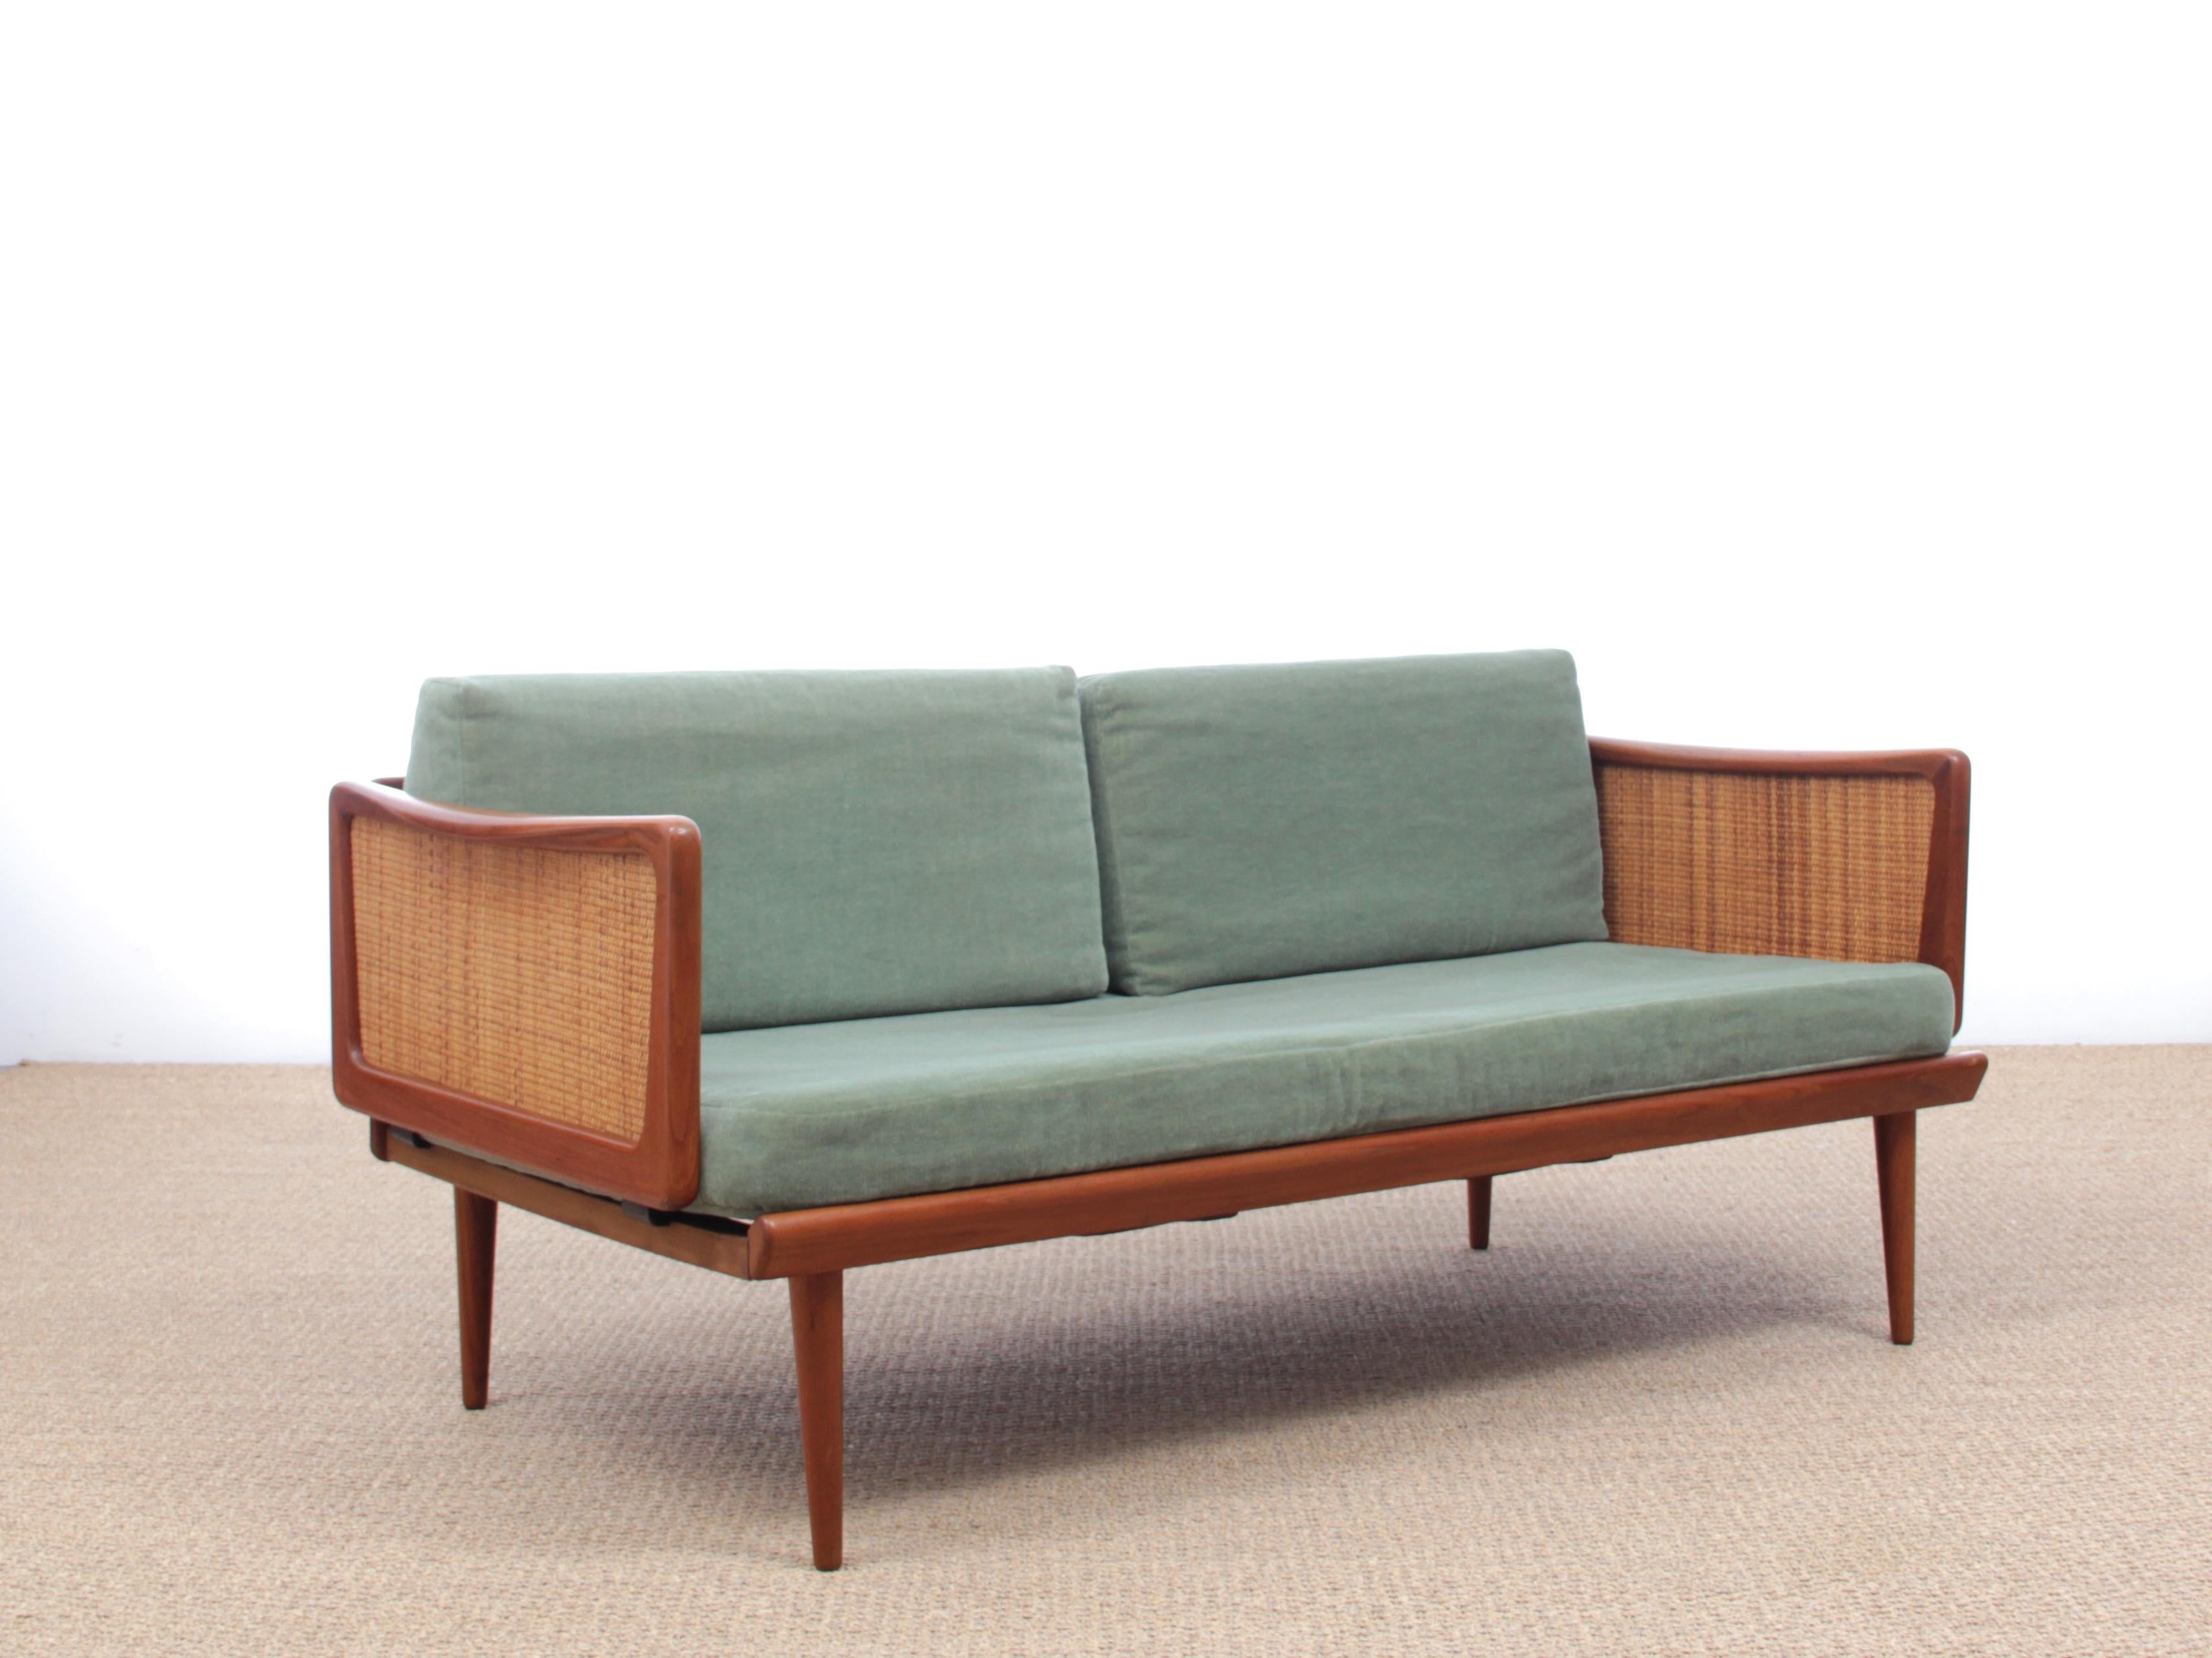 Mid-20th Century Mid-Century Modern Scandinavian Sofa 2 Seats FD451 by Peter Hvidty & Orla Mølga